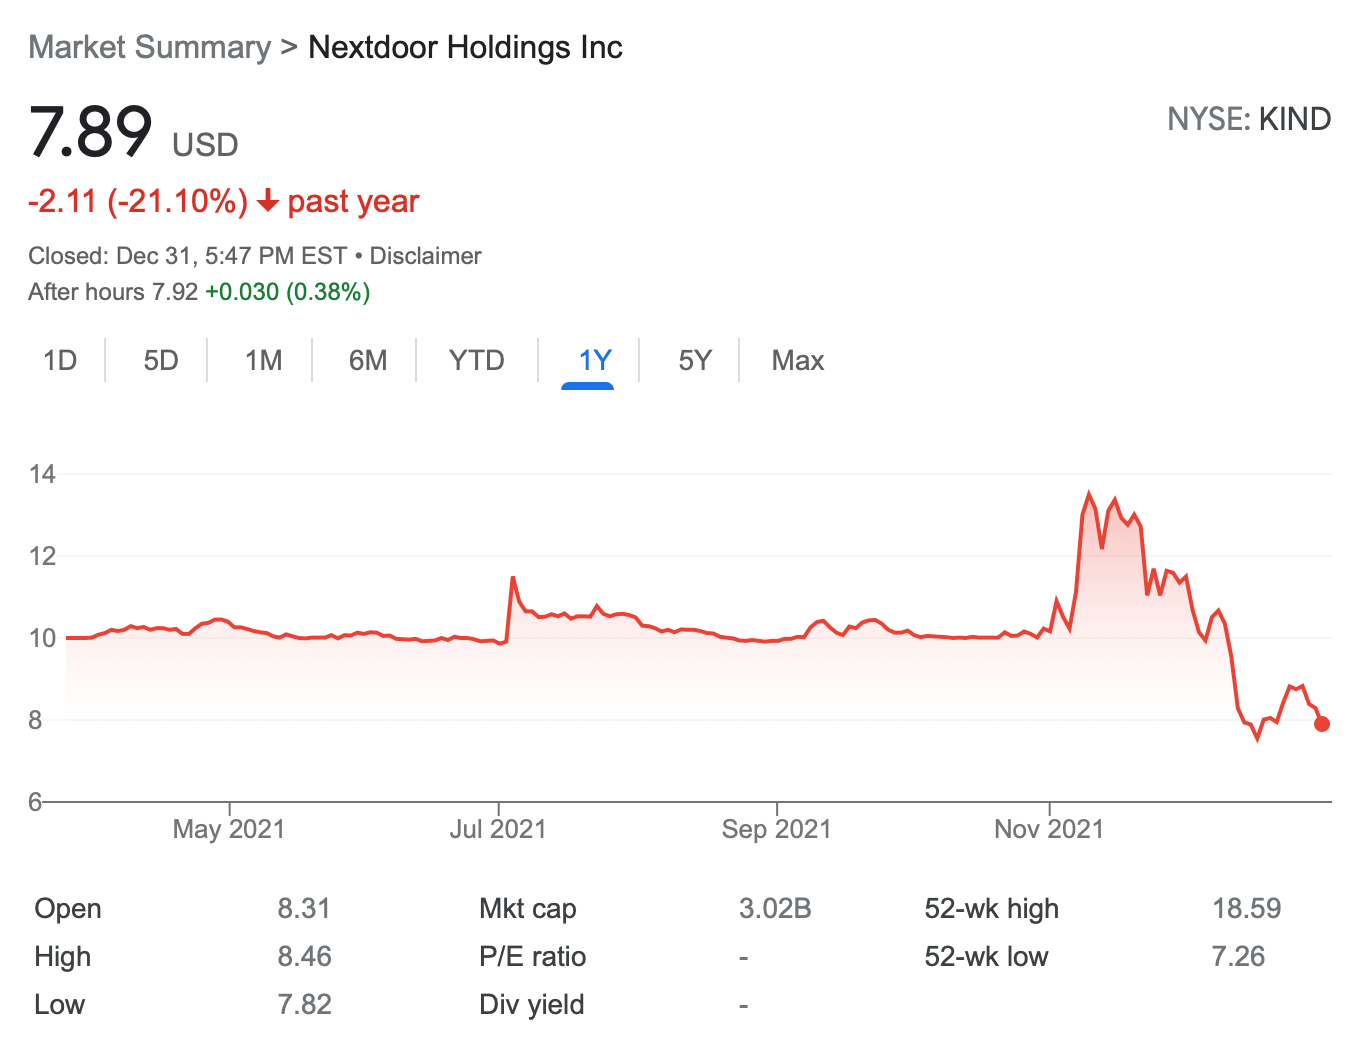 Nextdoor (KIND) Stock Price on December 31, 2021